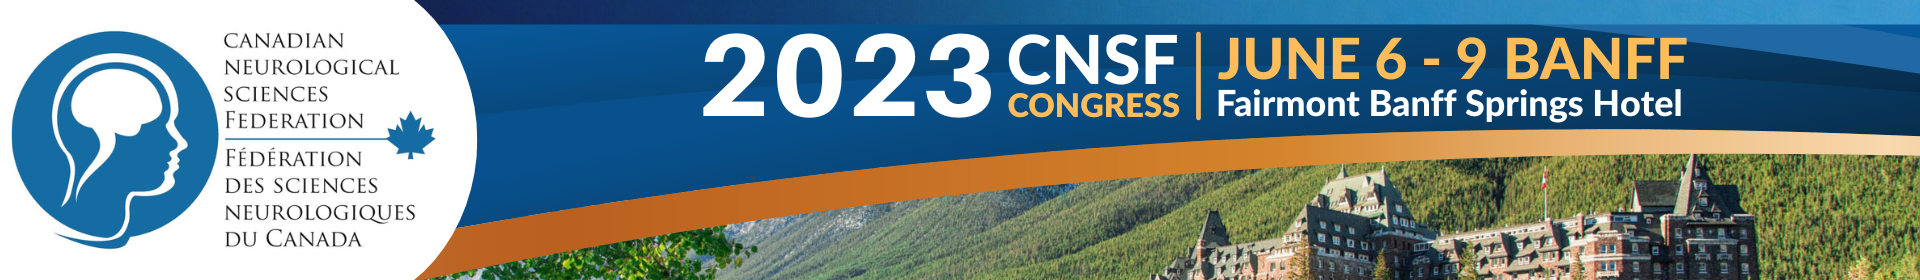 2023 CNSF Congress